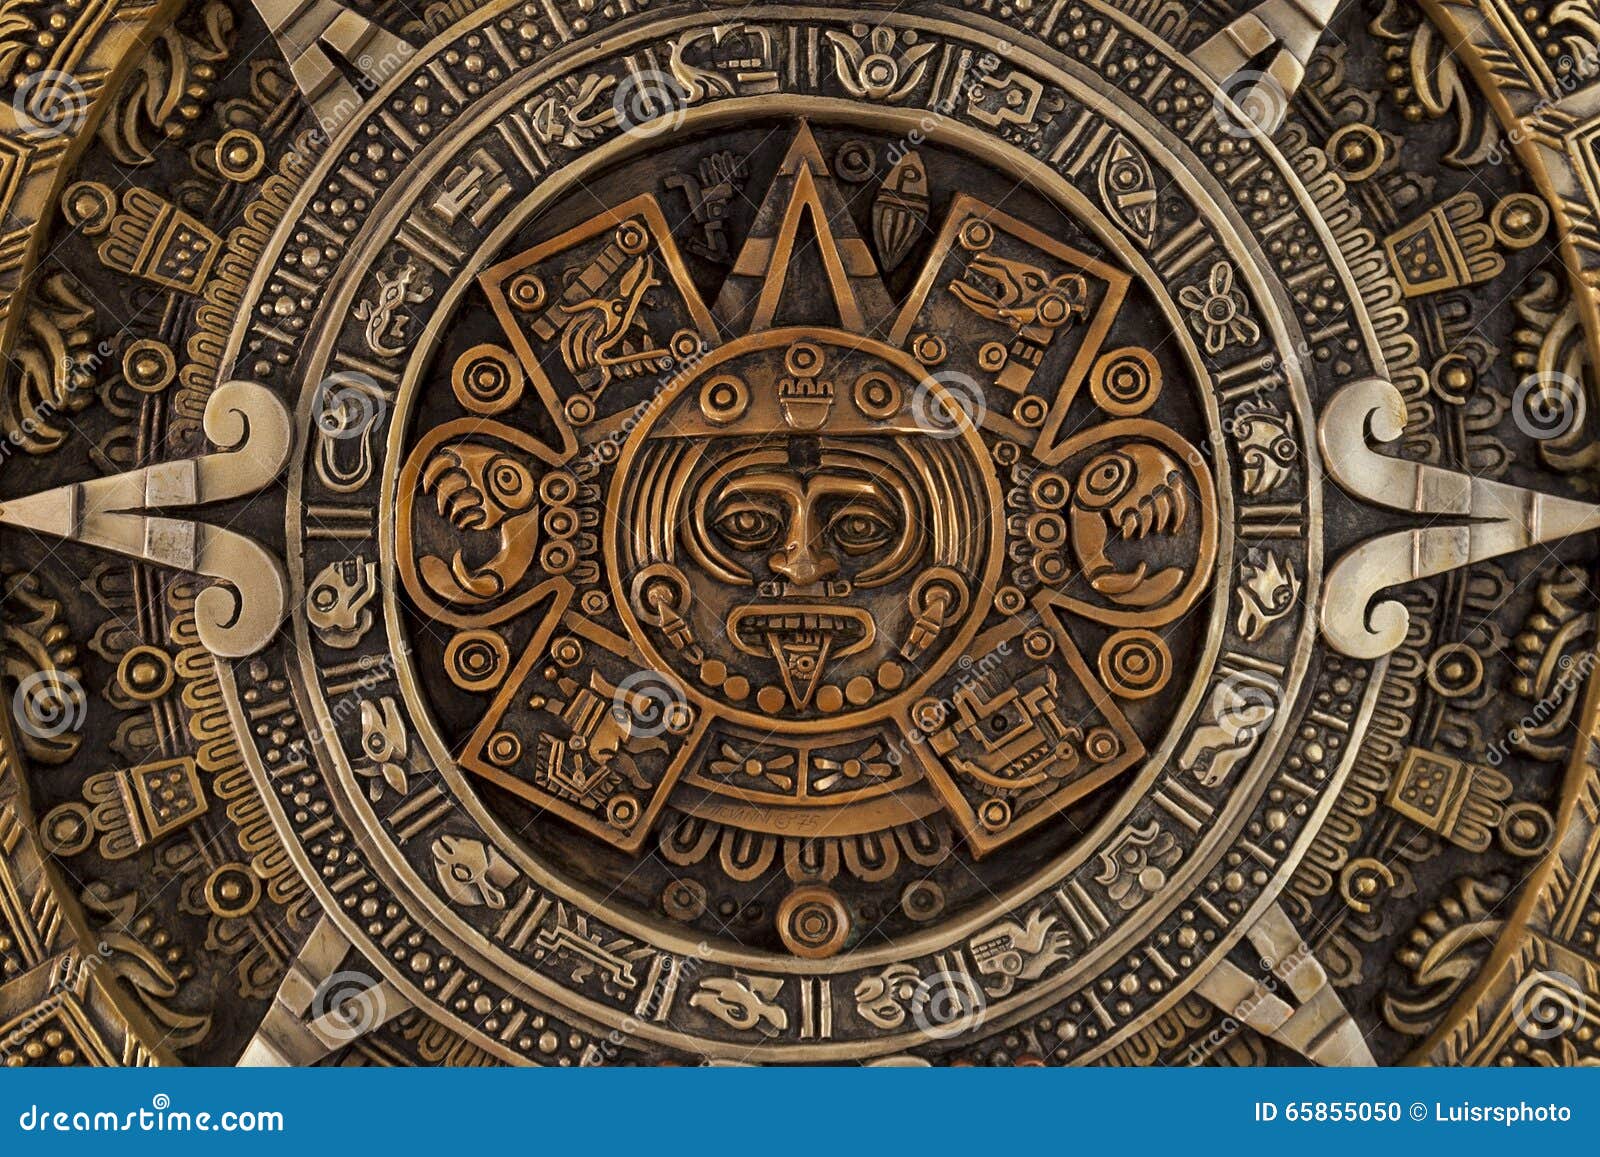 close view of the aztec calendar